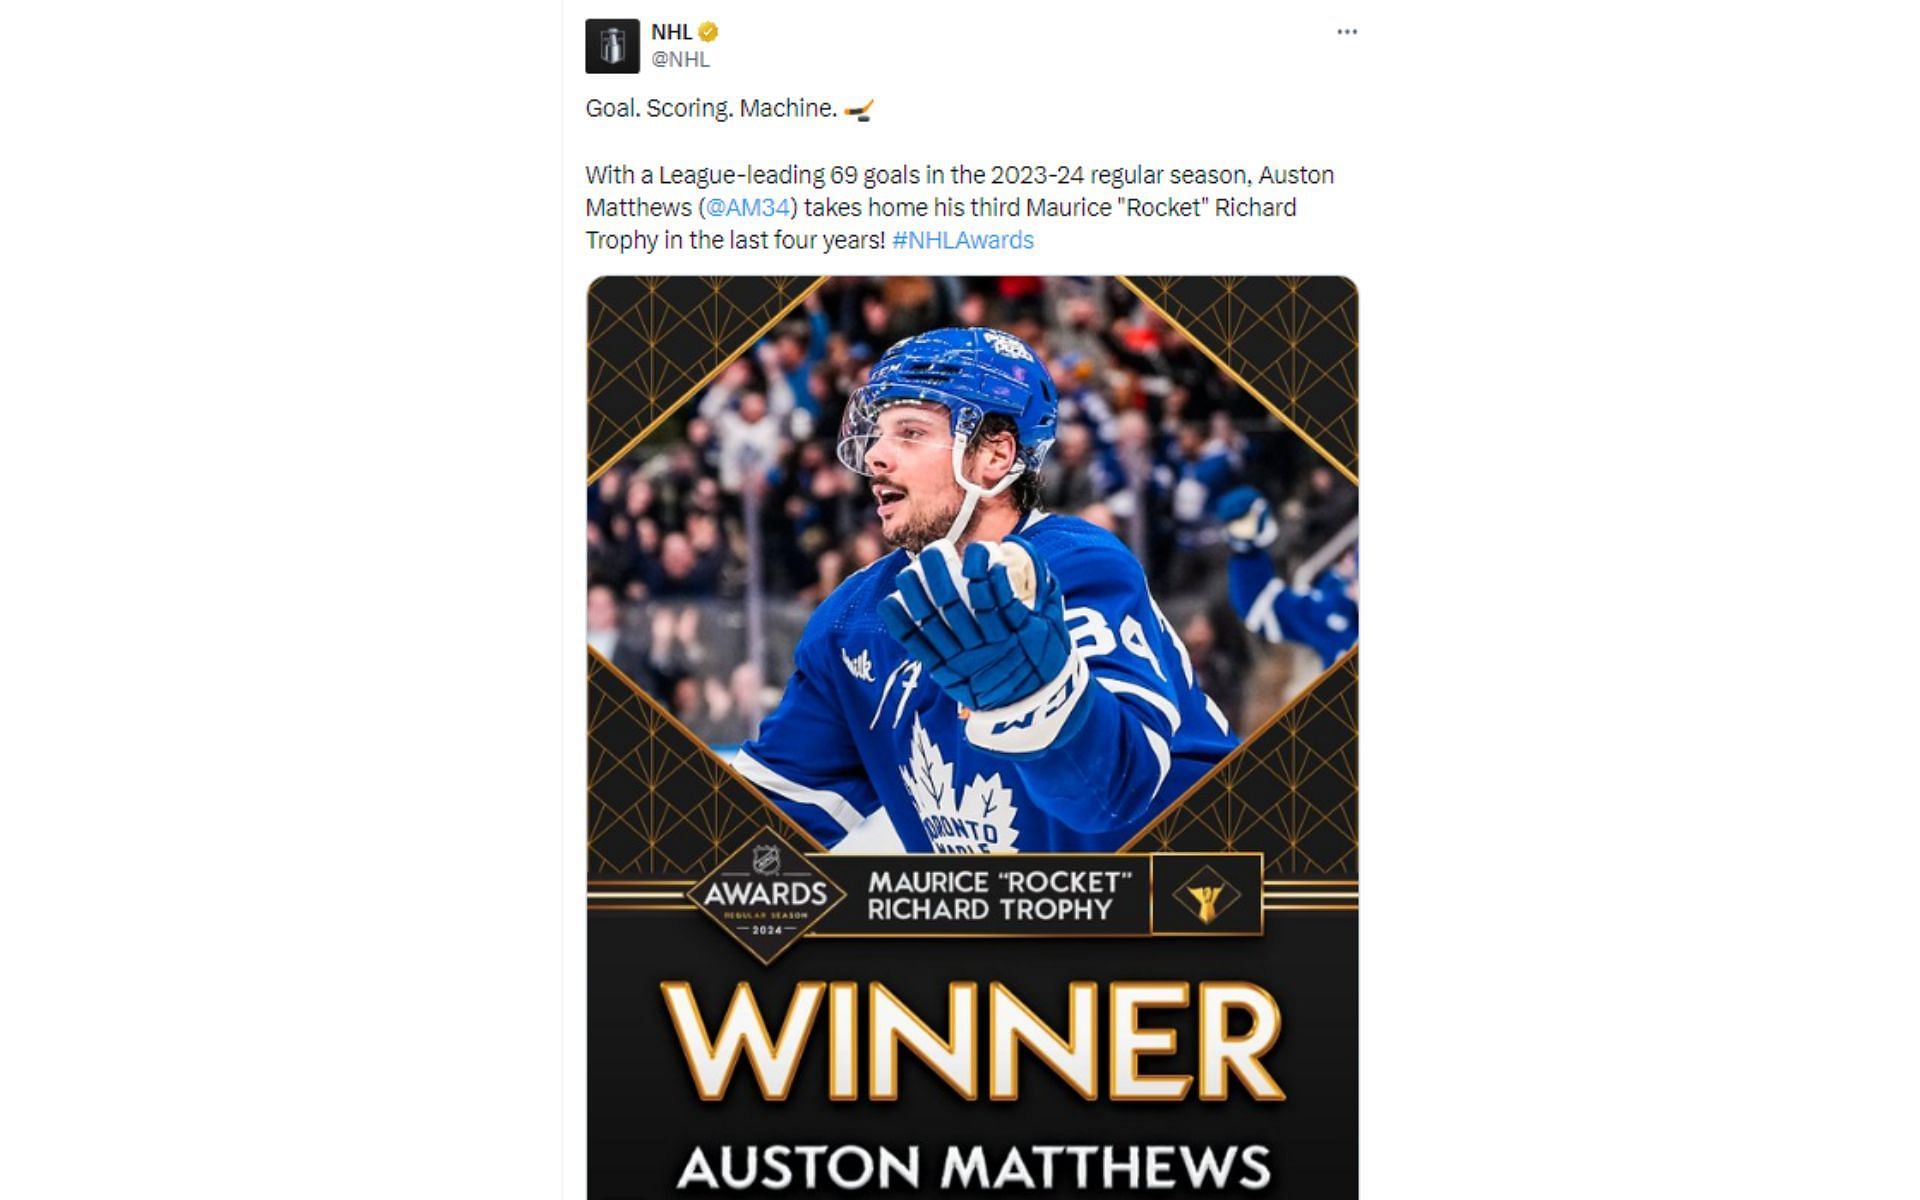 Tweet regarding Matthews&#039; Rocket Richard Trophy win [Image courtesy: @NHL - X]